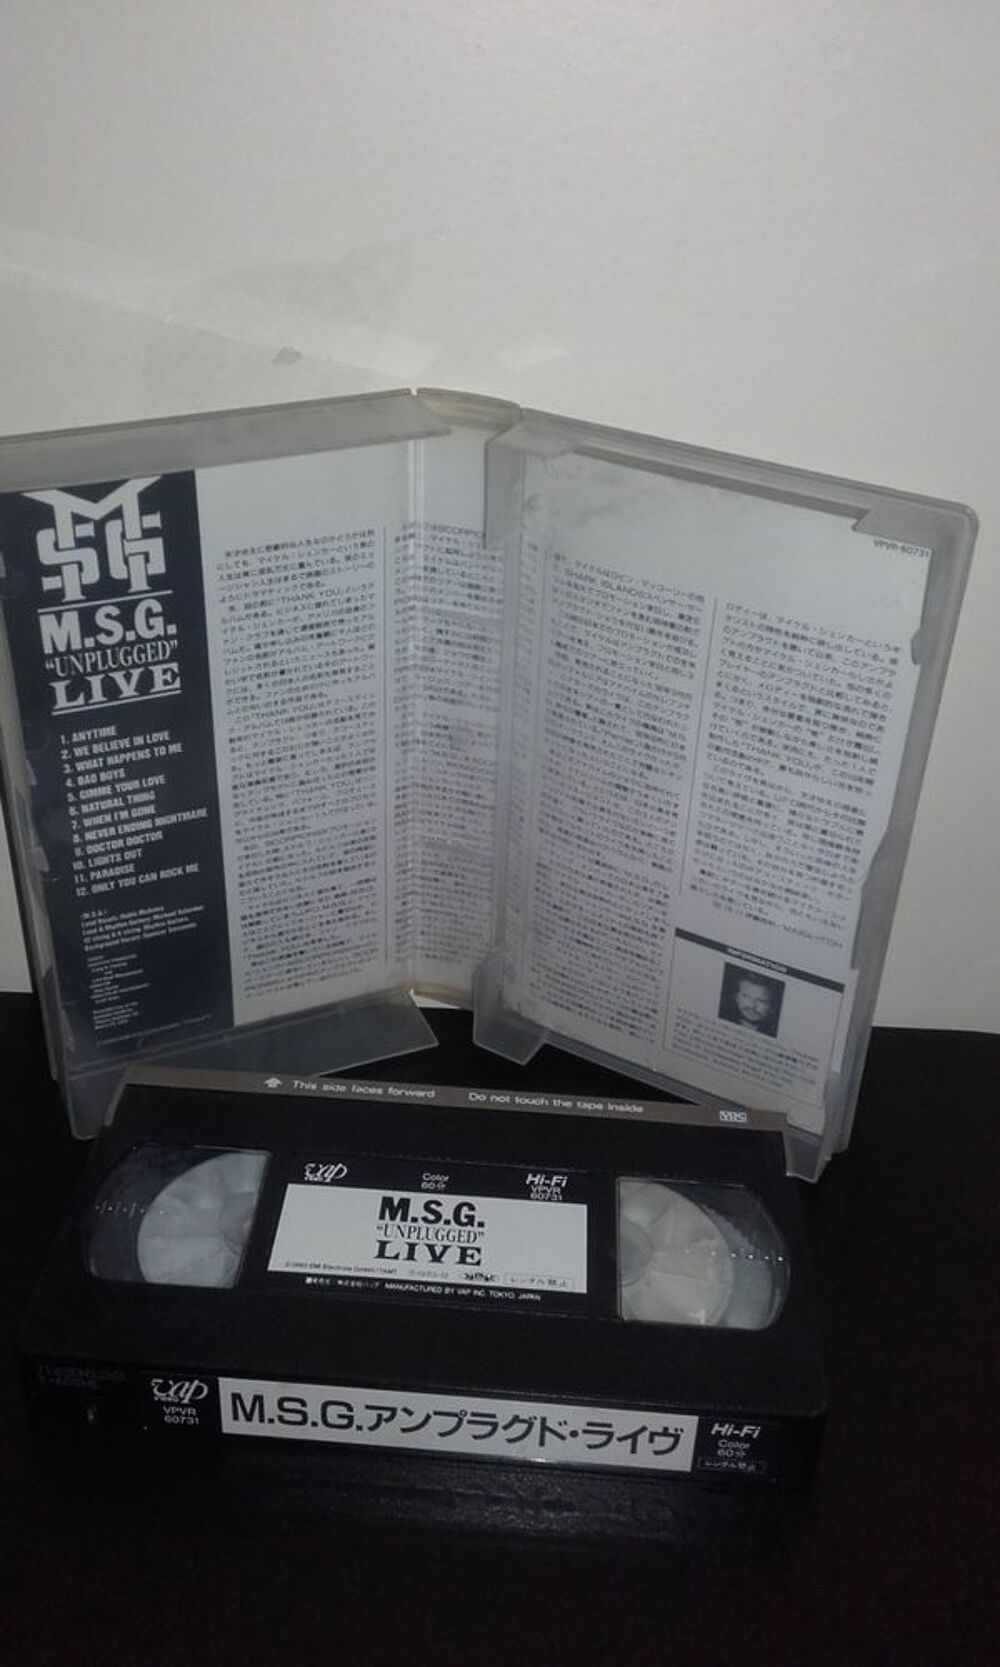 McAuley Schenker Group : M.S.G. Unplugged Live (Japan VHS Vi DVD et blu-ray